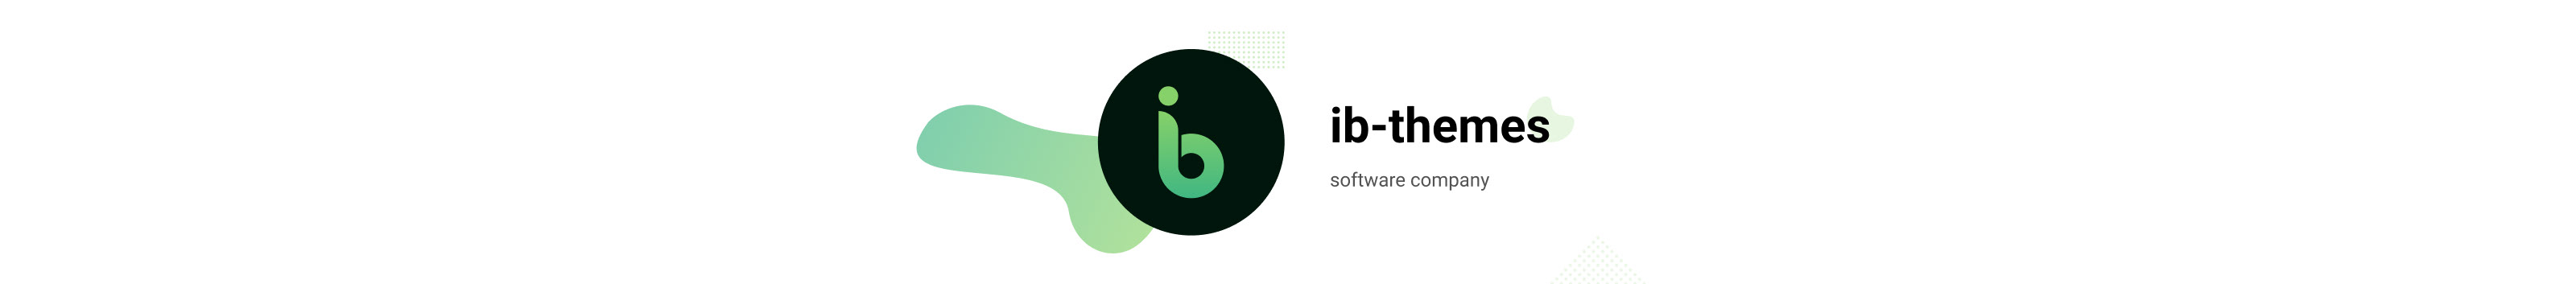 ib themes's profile banner